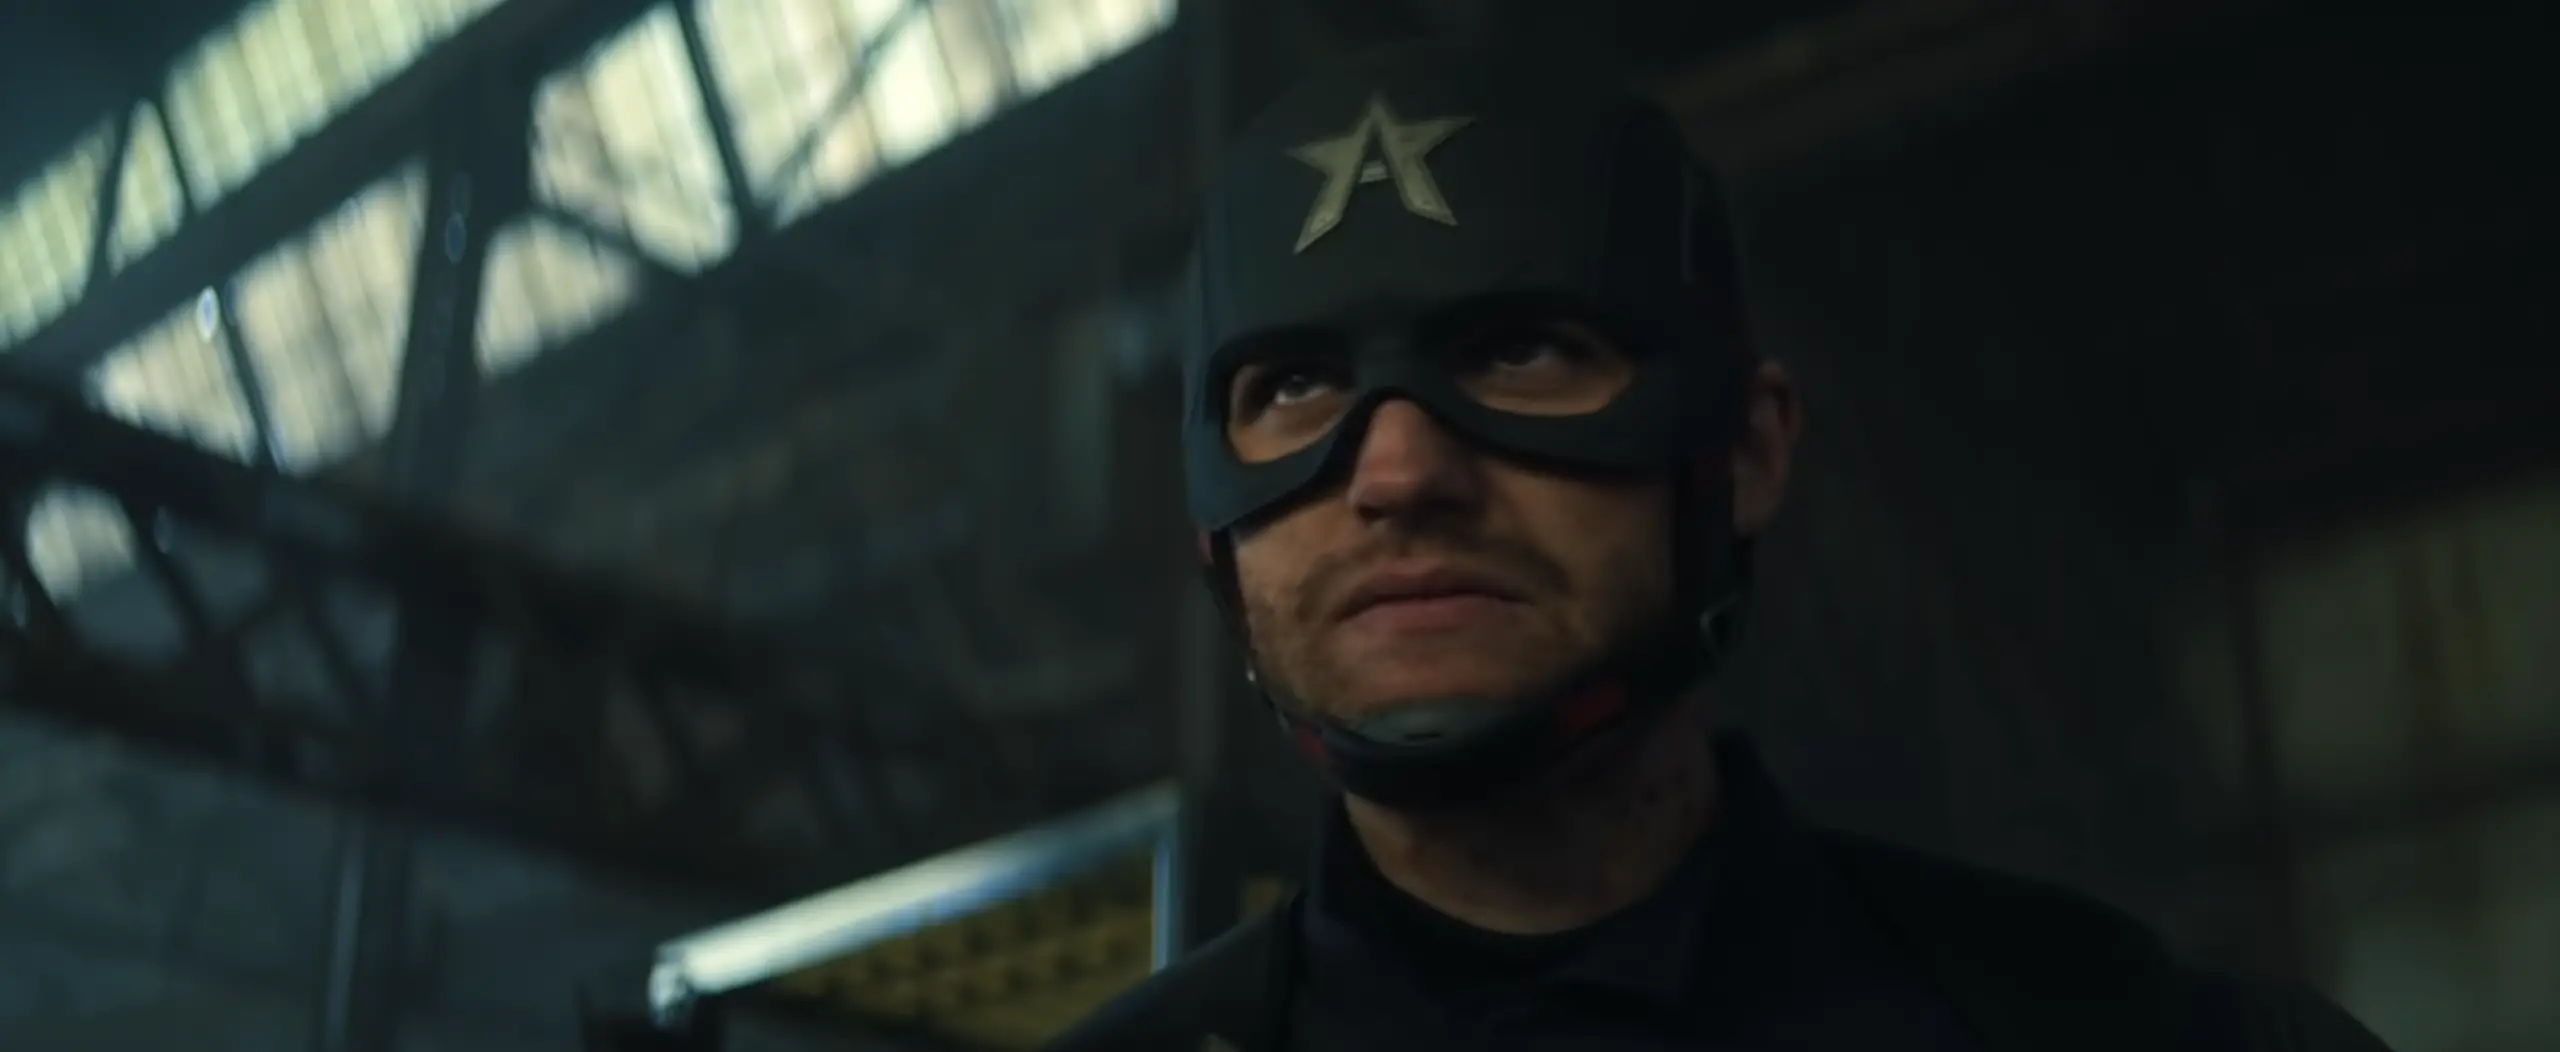 John Walker is not Captain America